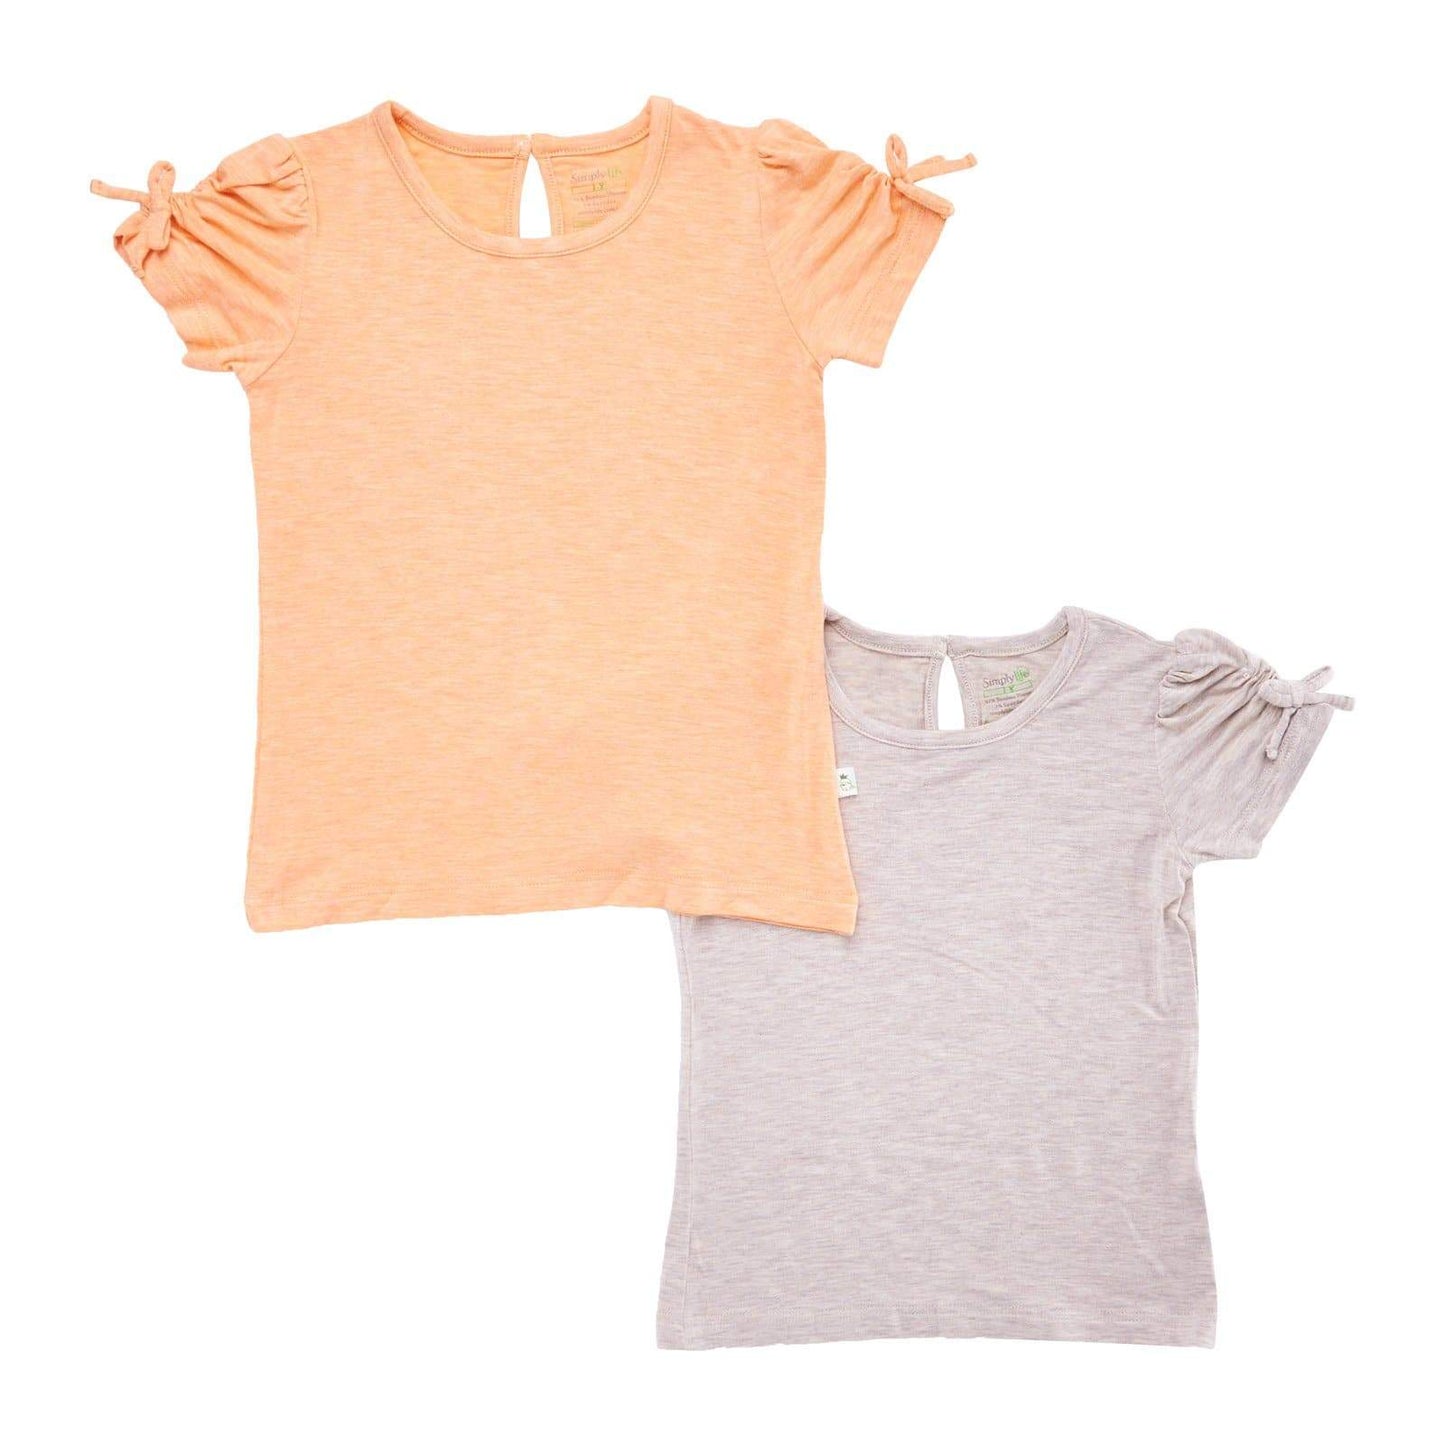 Girls' Tee - Gartherised Sleeves (pack of 2) (Sandwash Khaki & Orange)